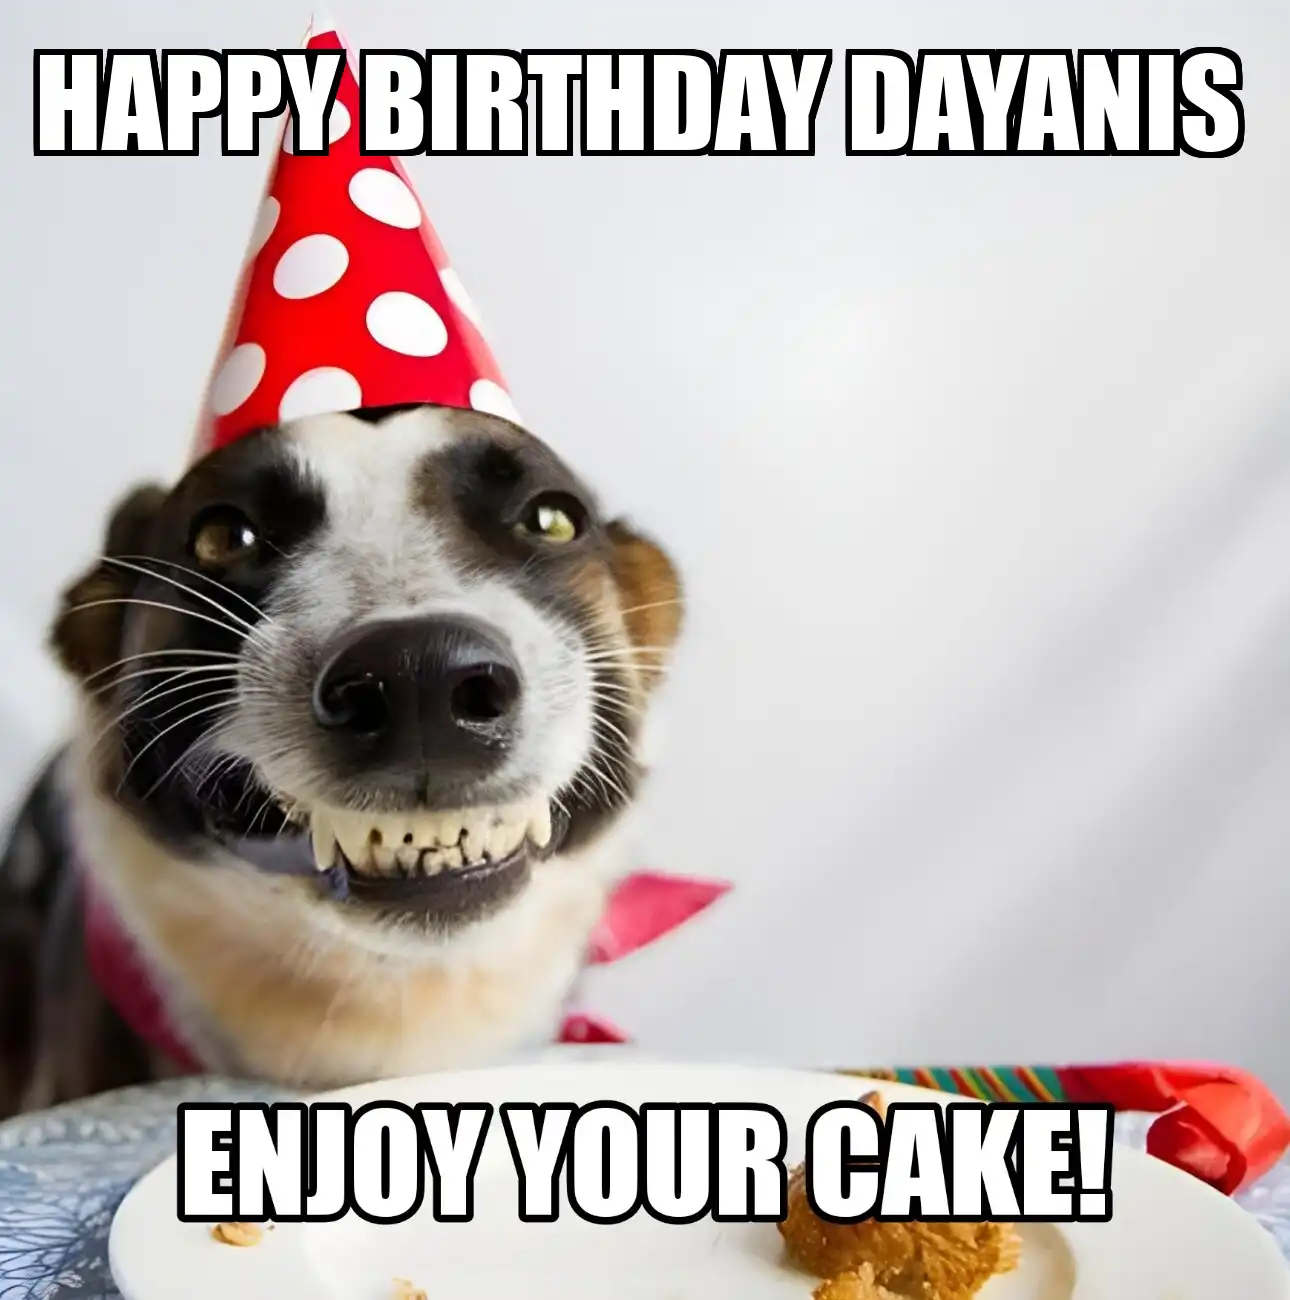 Happy Birthday Dayanis Enjoy Your Cake Dog Meme